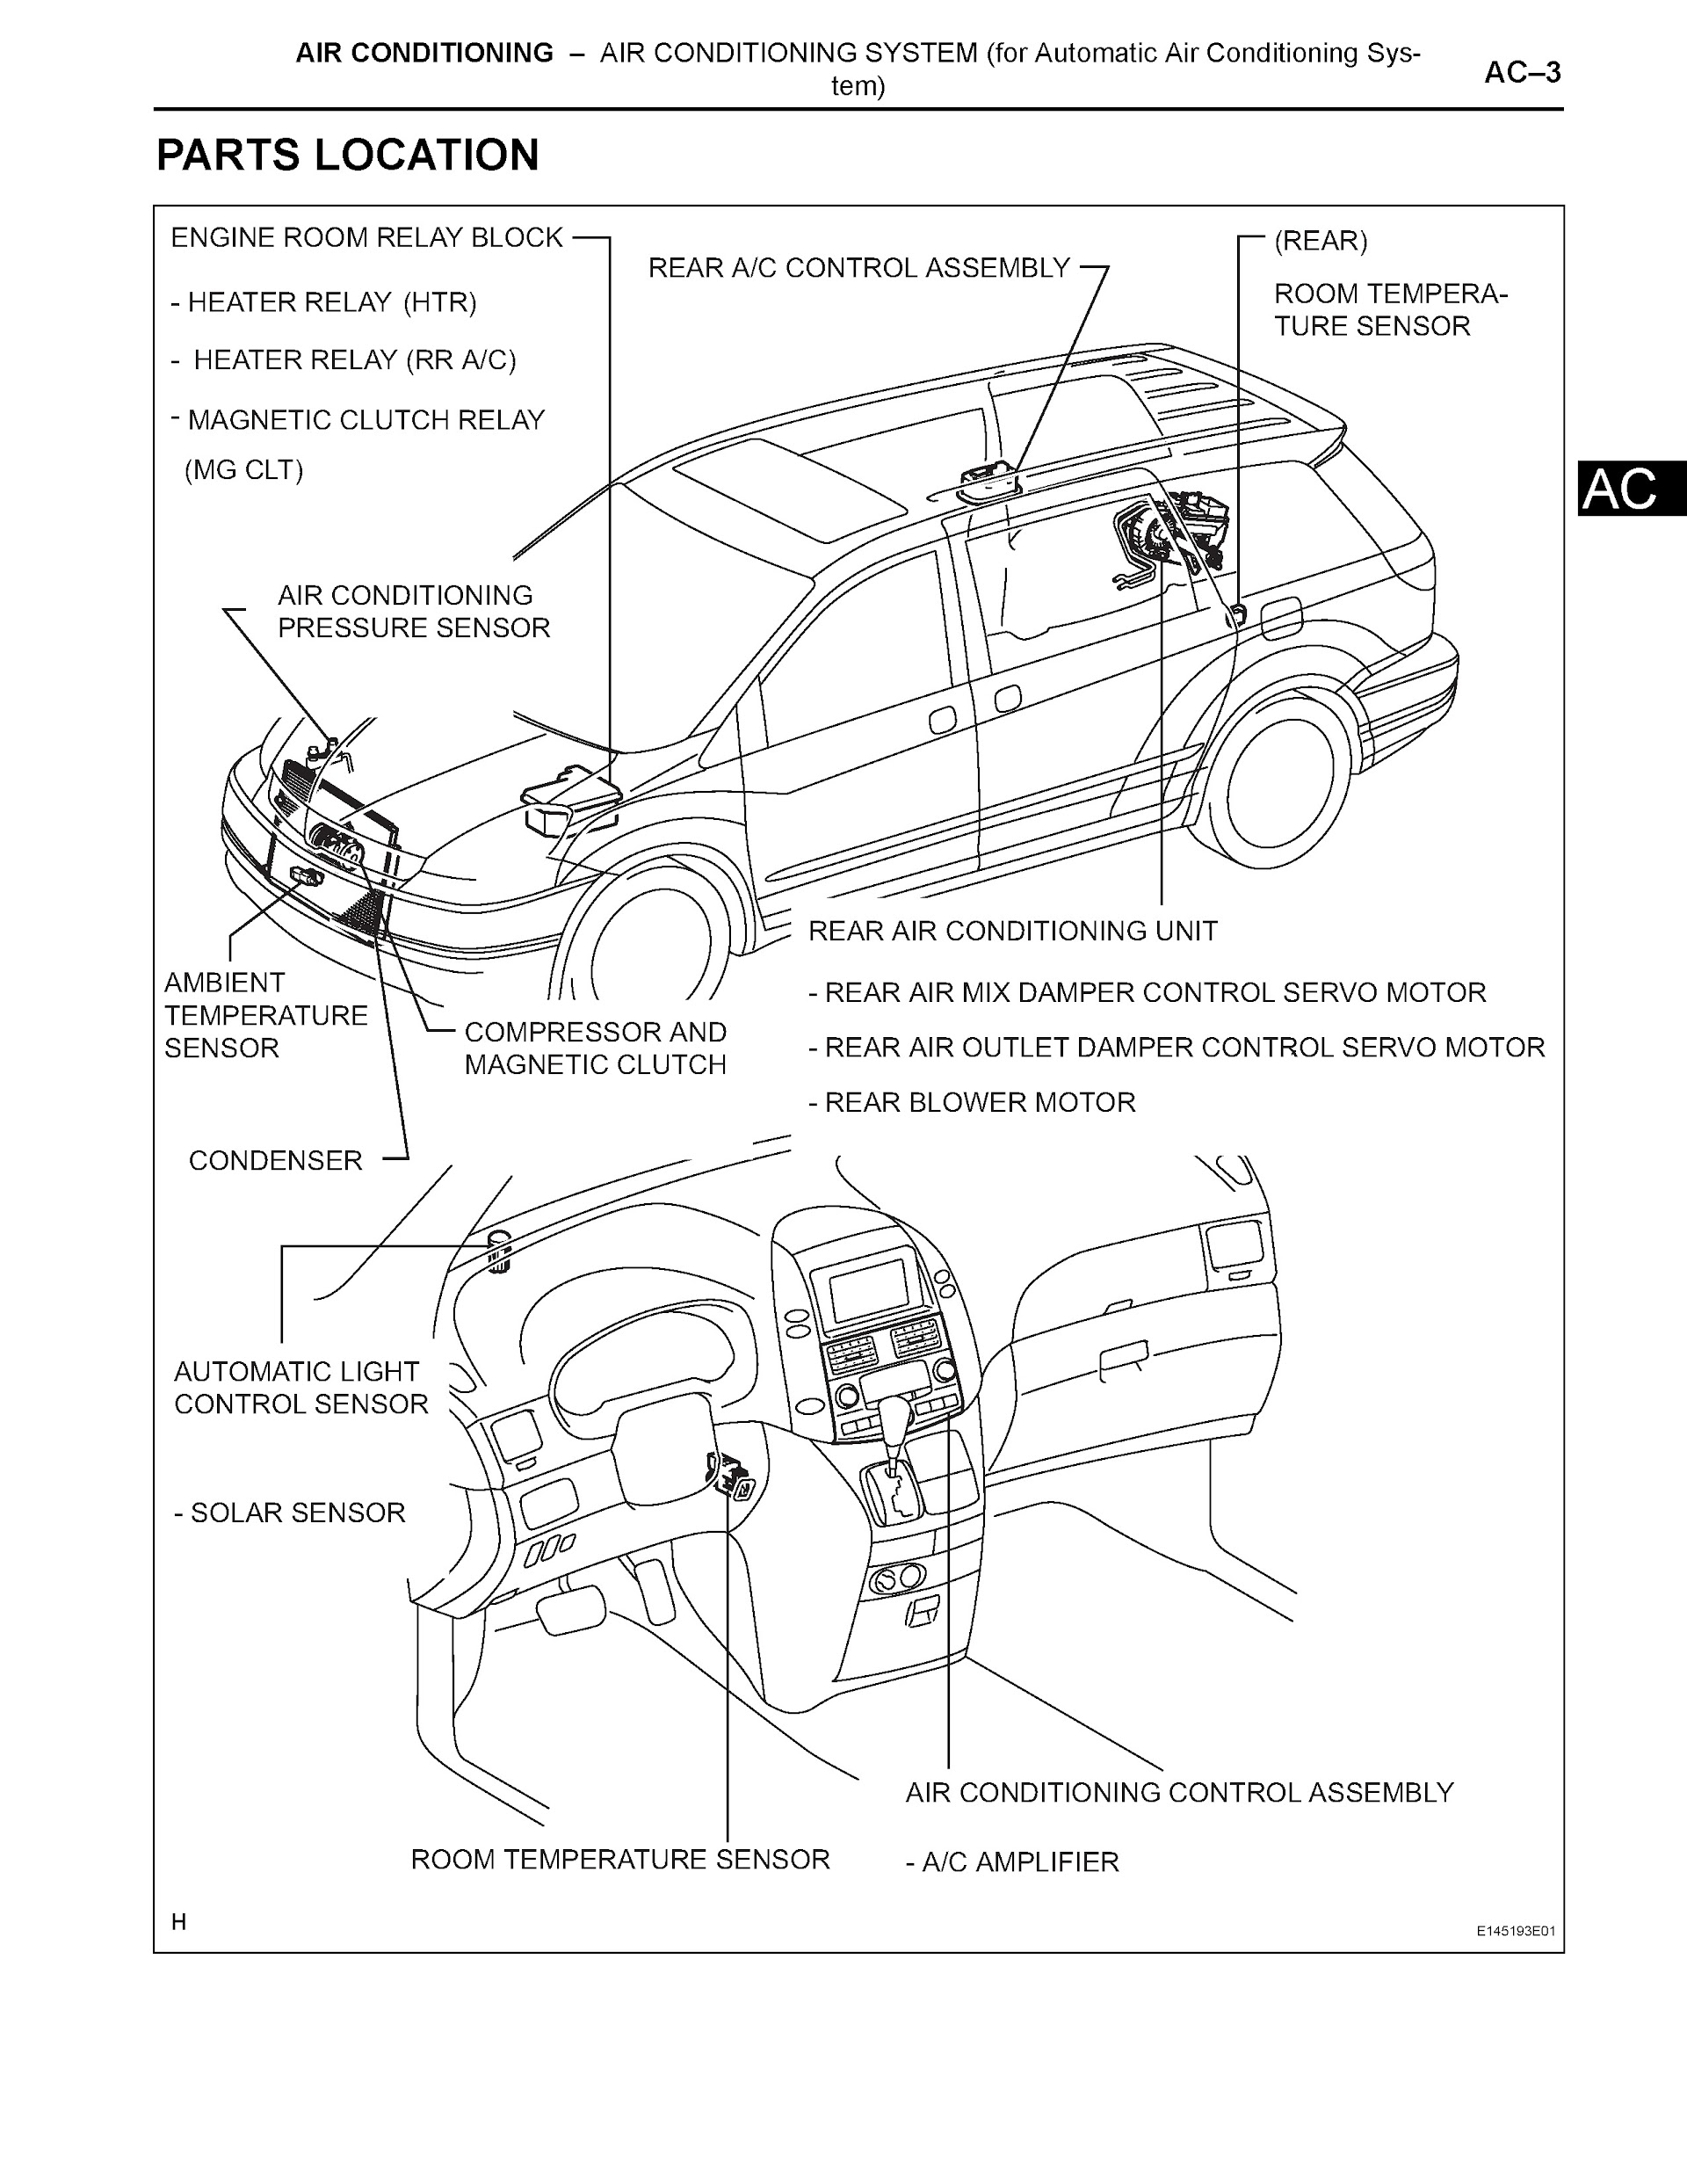 2007 Toyota Sienna Repair Manual, Air Conditioning 